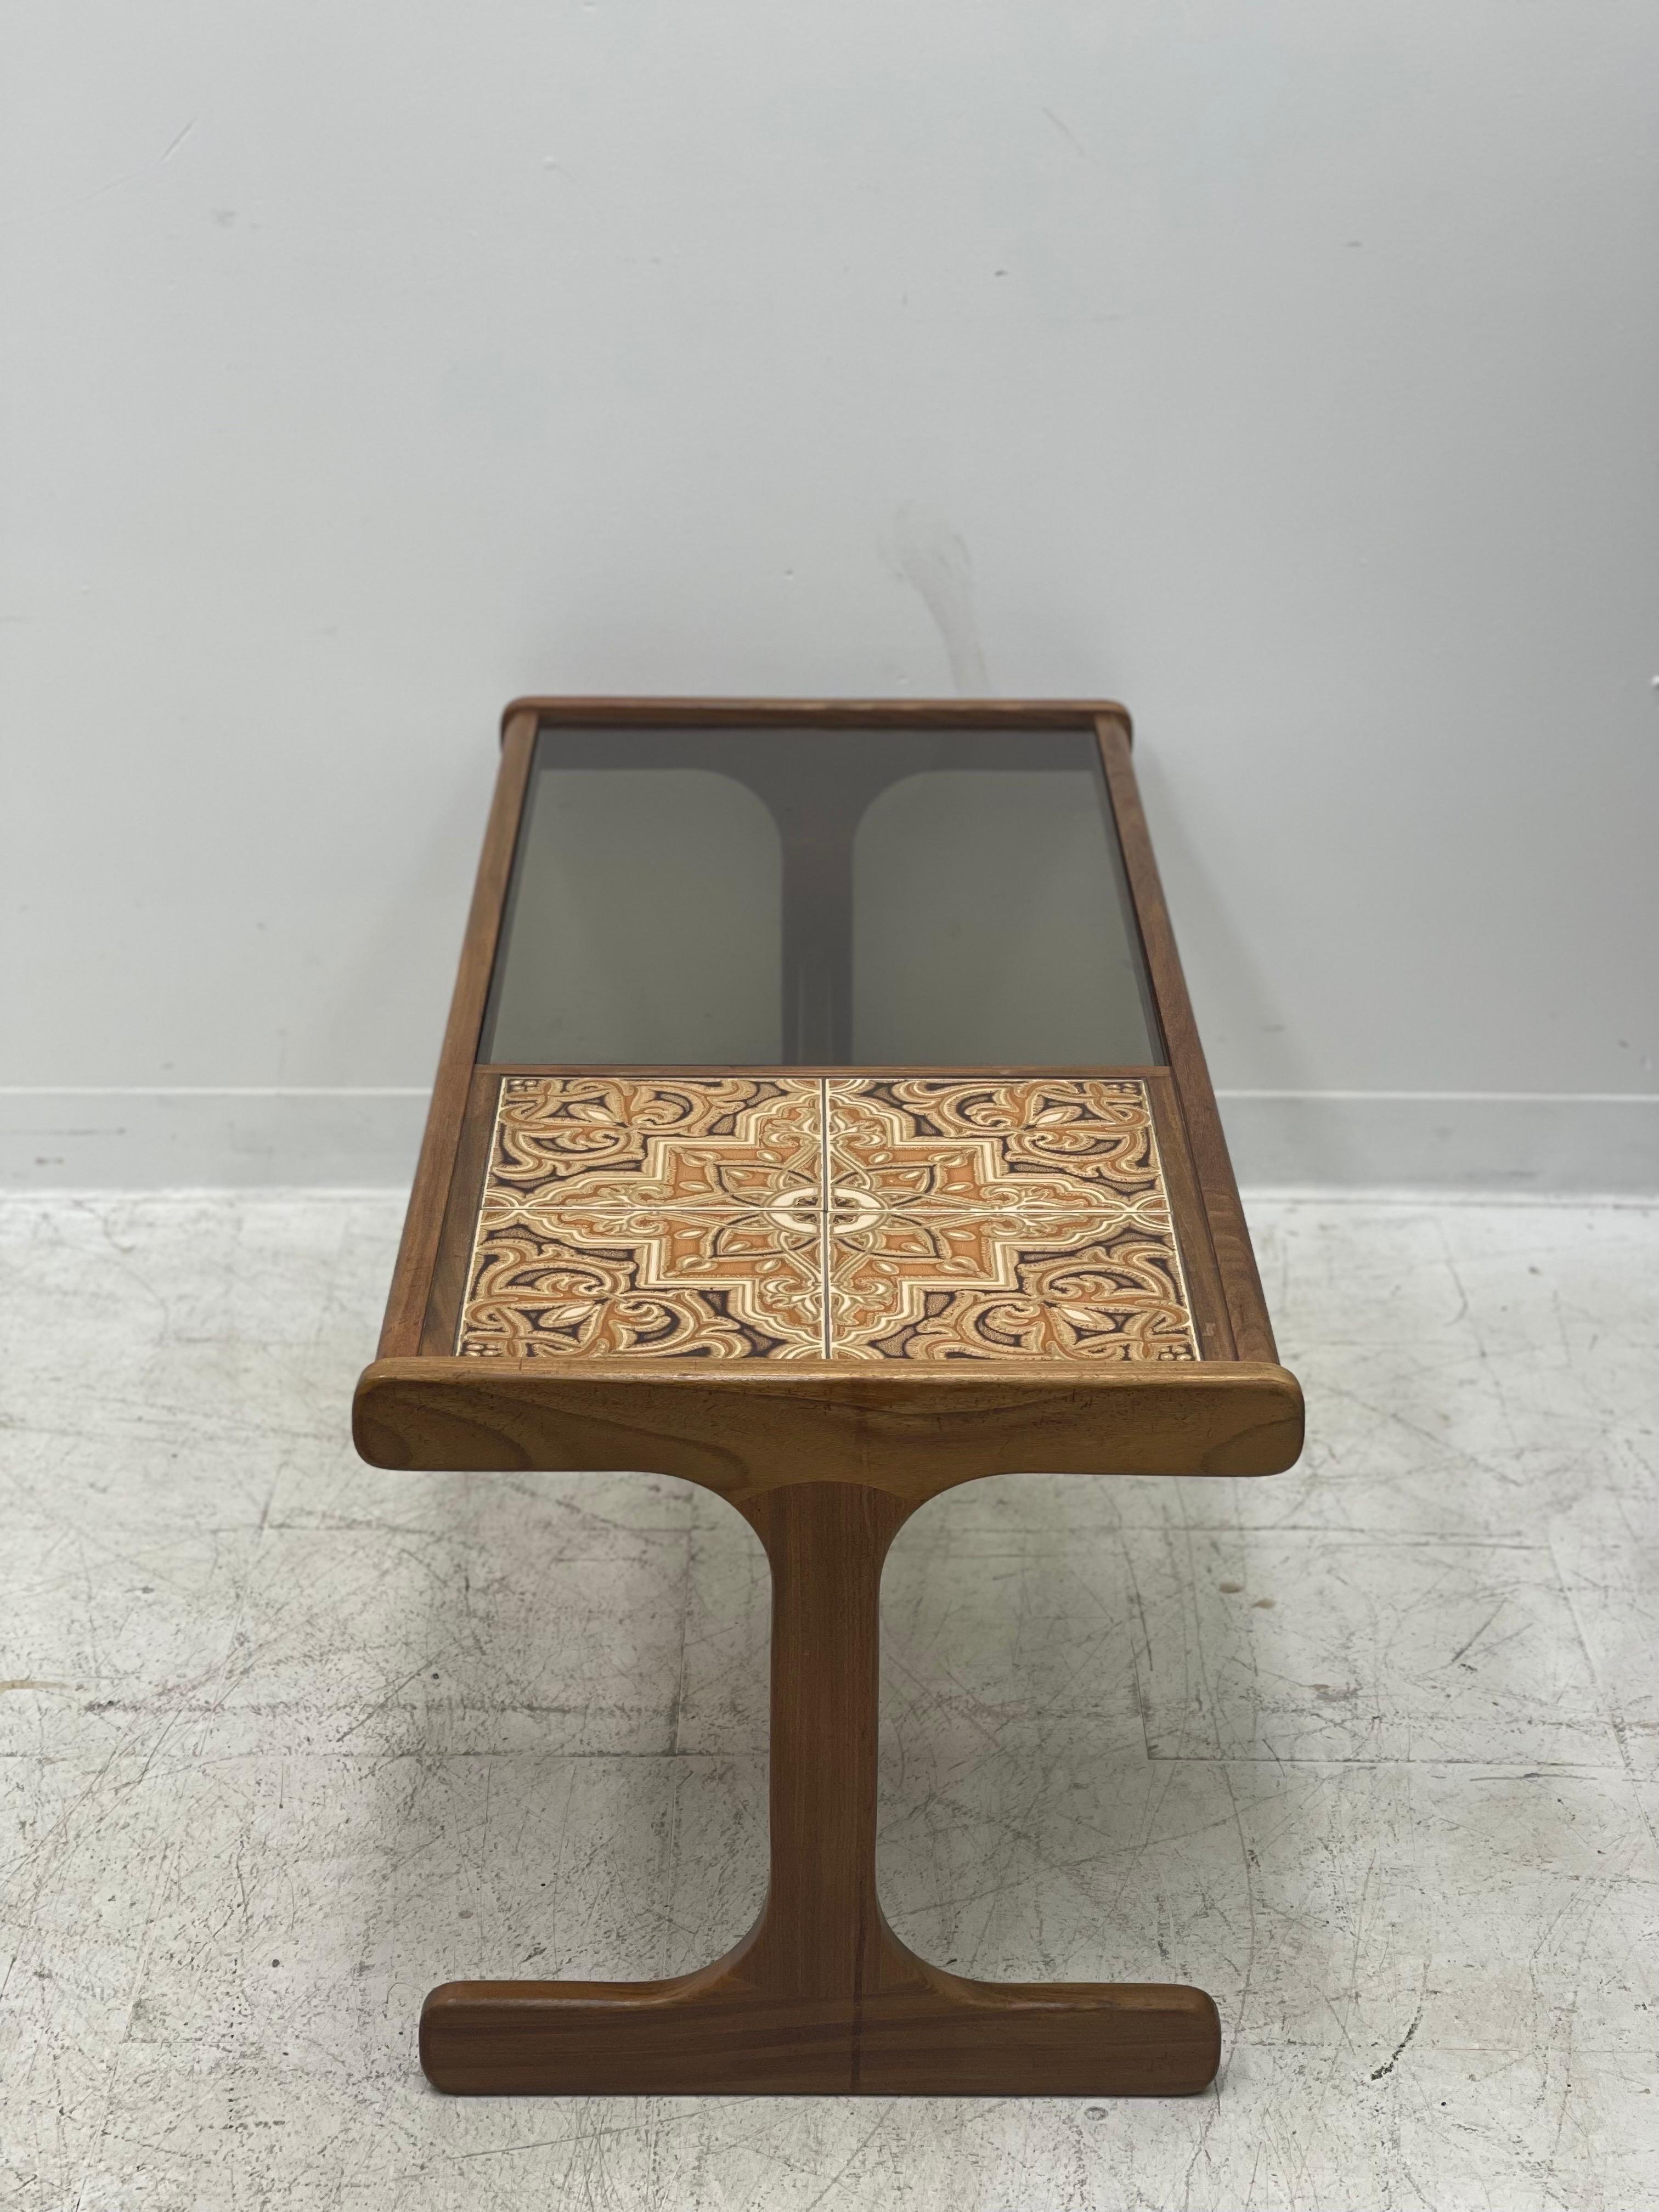 Vintage Danish Mid Century Modern Teak Tile Top Coffee Table 

Dimensions: 47 1/2 W ; 18 H ; 20 D.